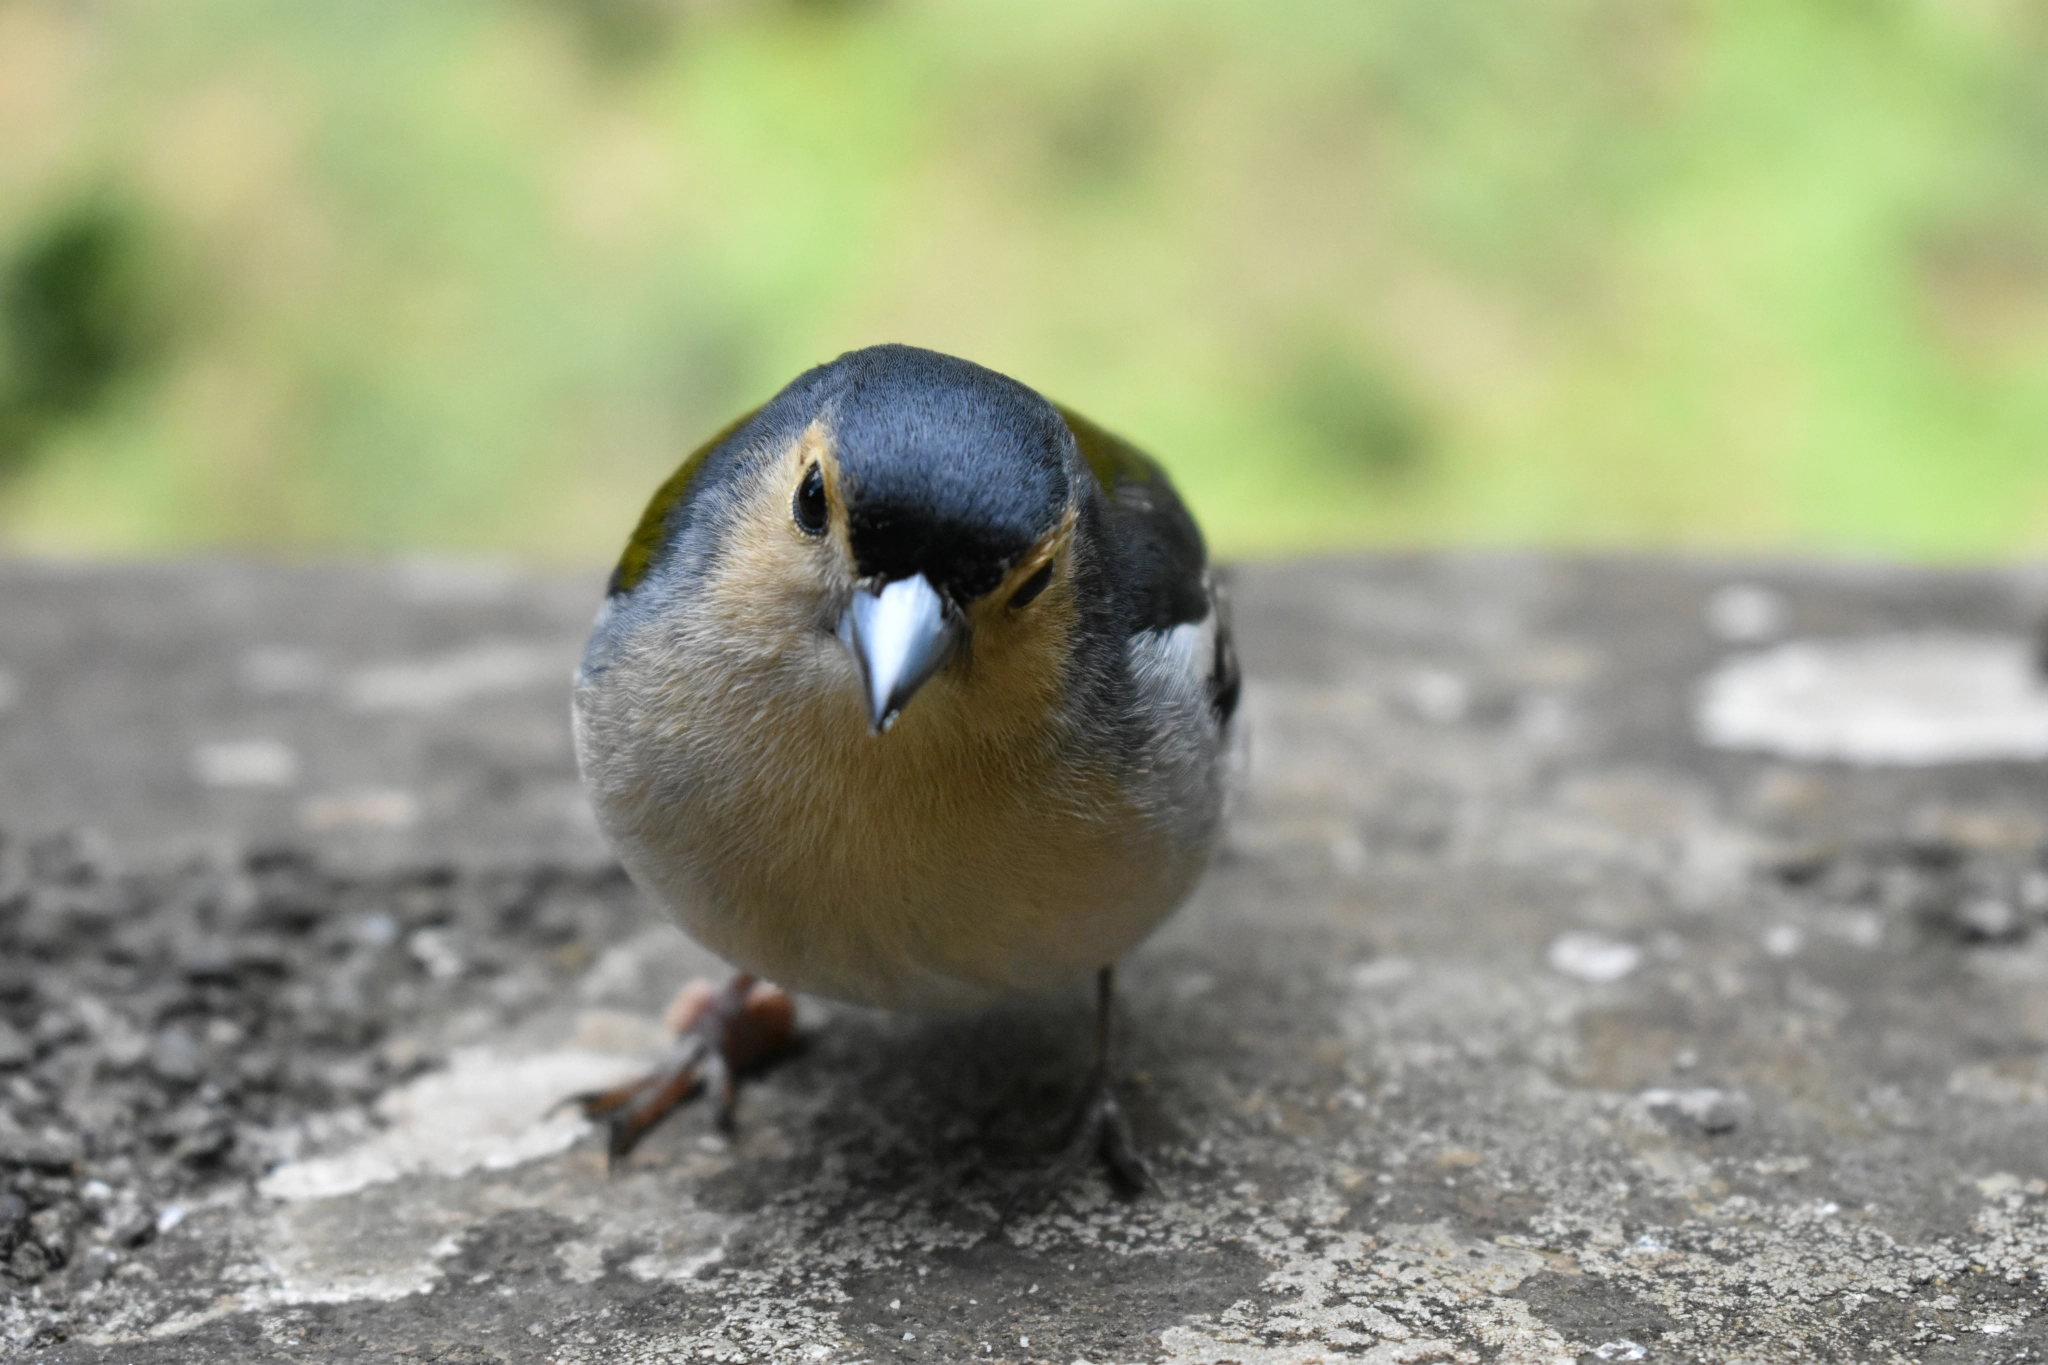 A Madeiran chaffinch staring at the camera